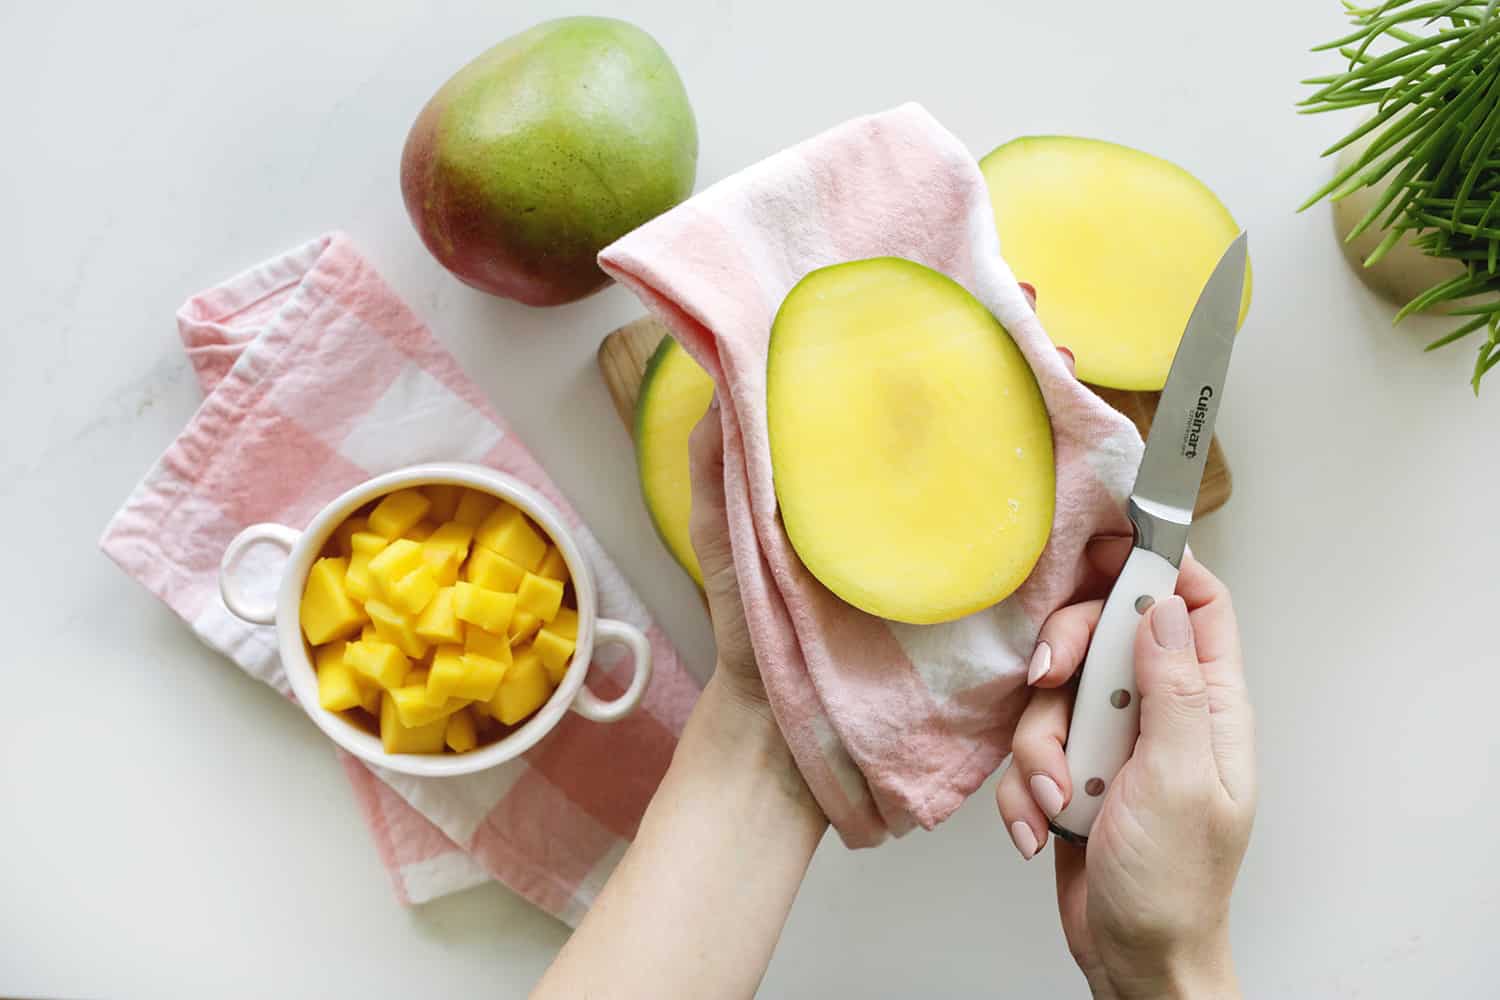 Hand holding half a mango